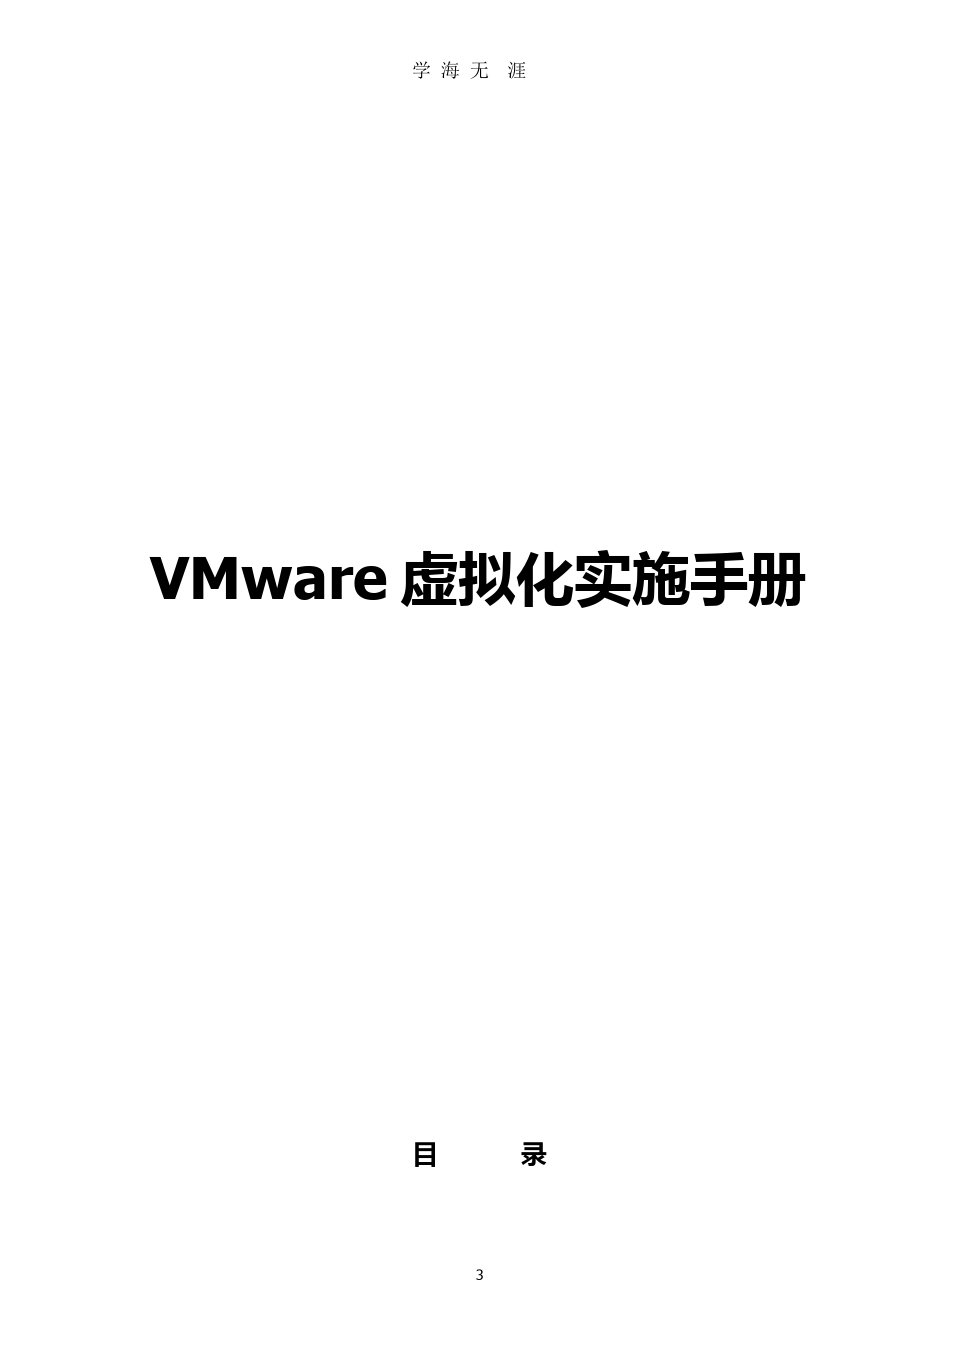 VMware虚拟化实施手册.pptx